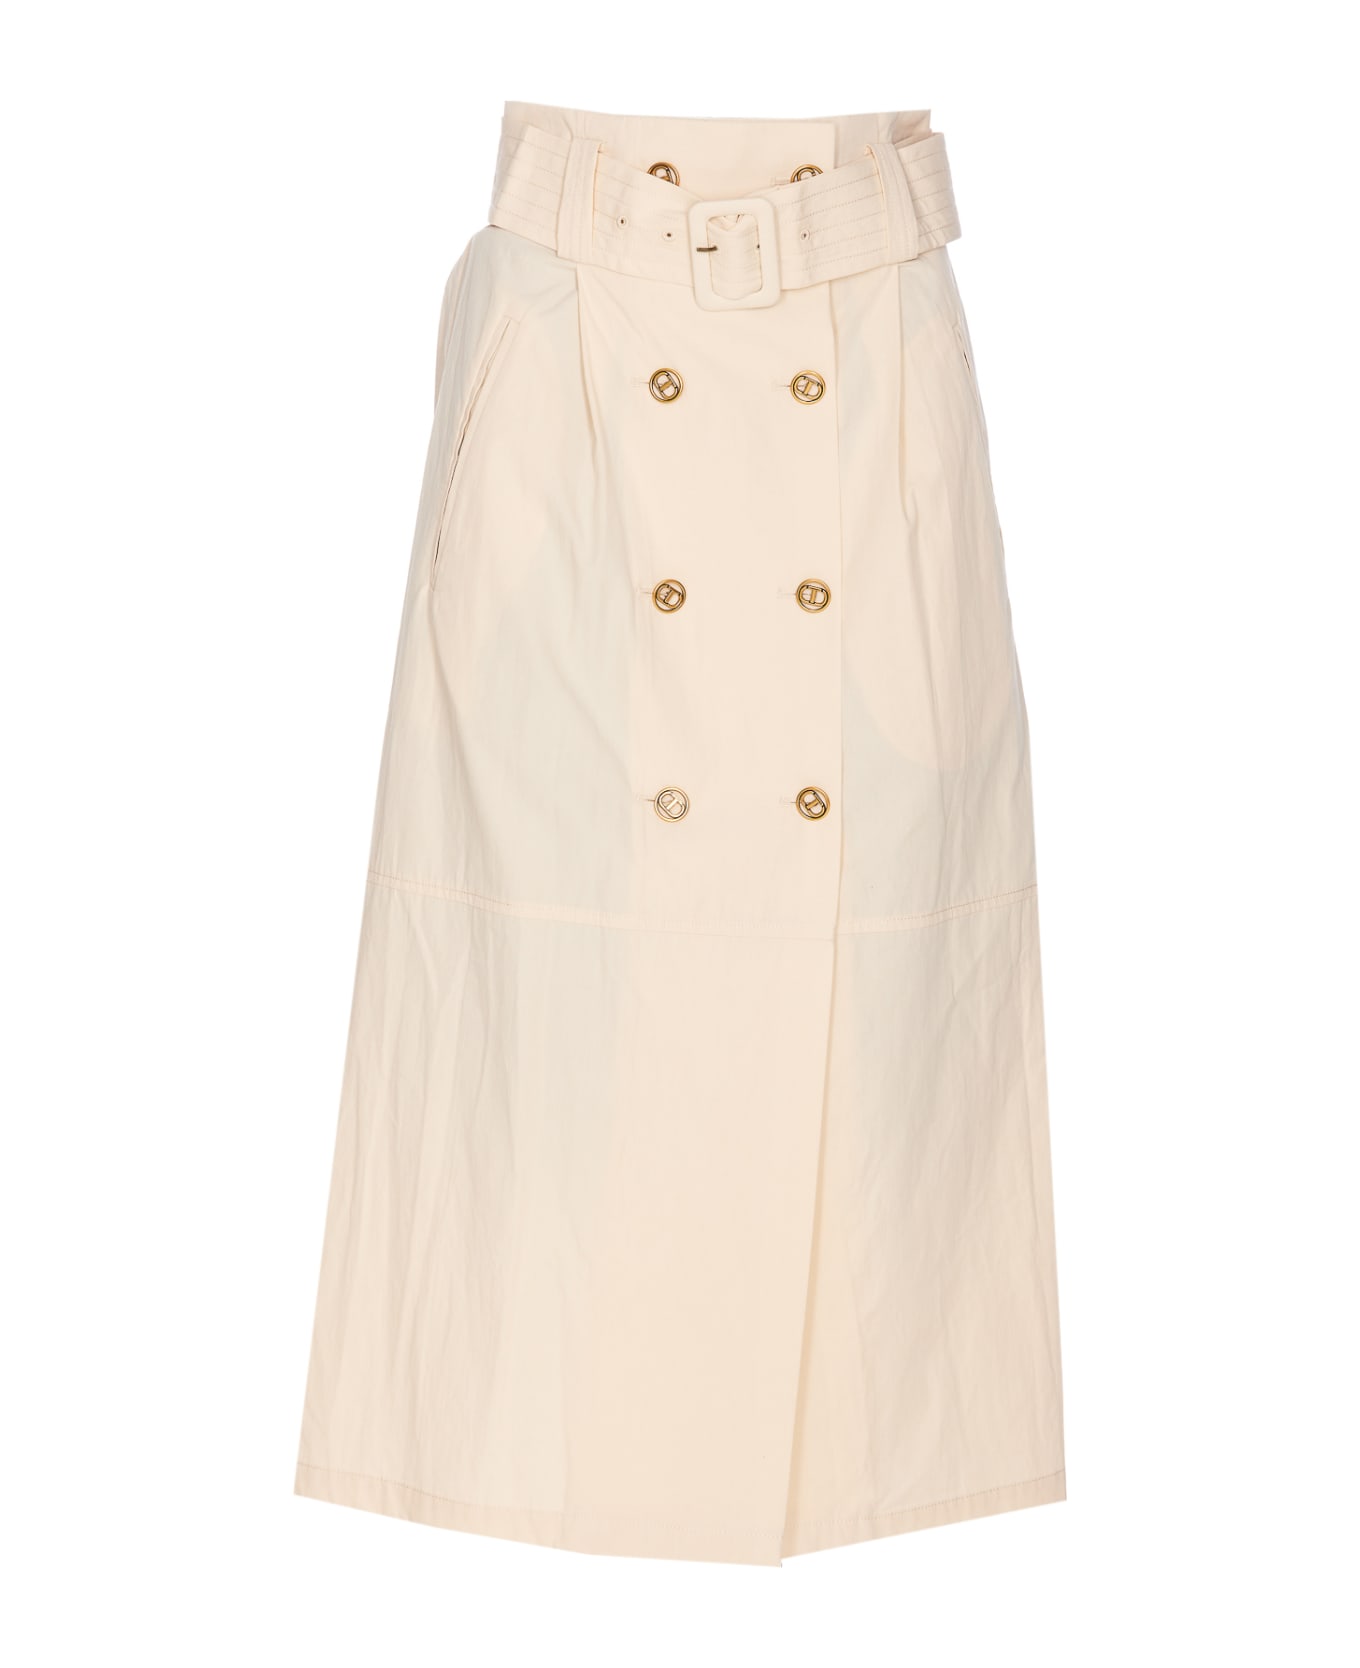 TwinSet Long Skirt - White スカート